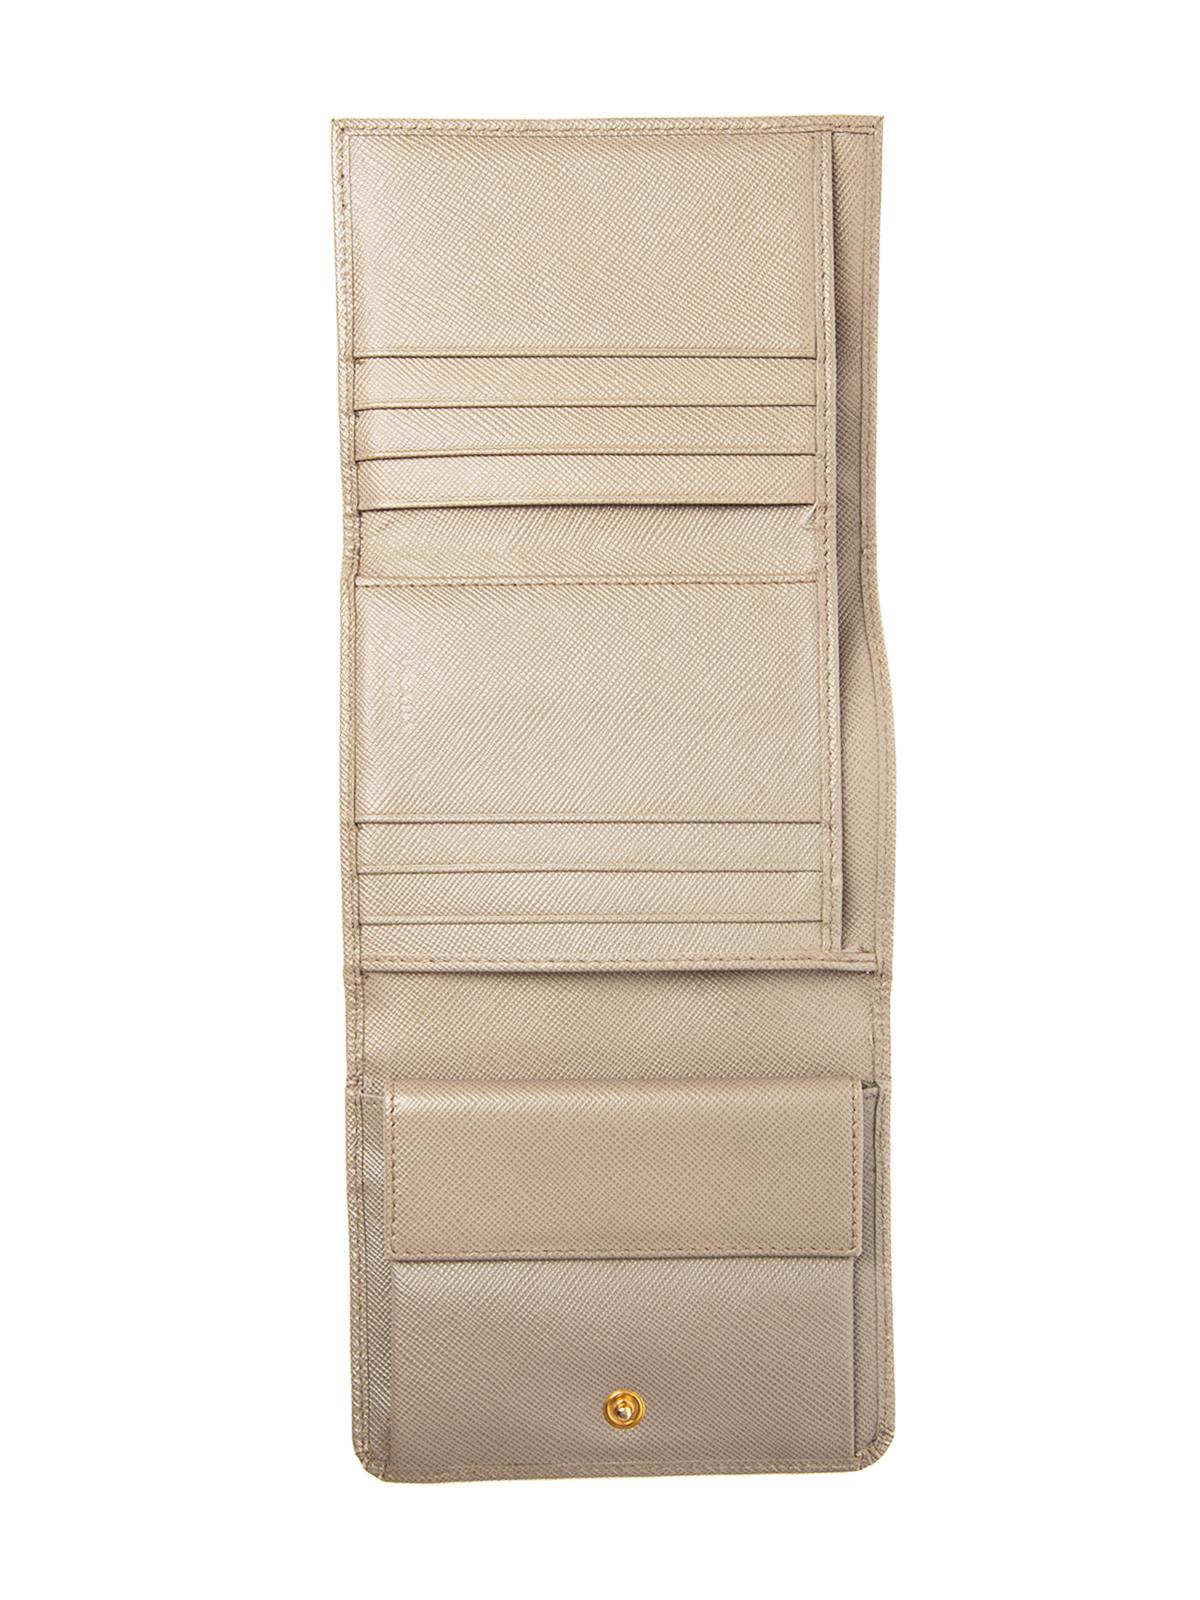 Pre-Loved Prada Women's Leather Prada Logo Fold Wallet 3